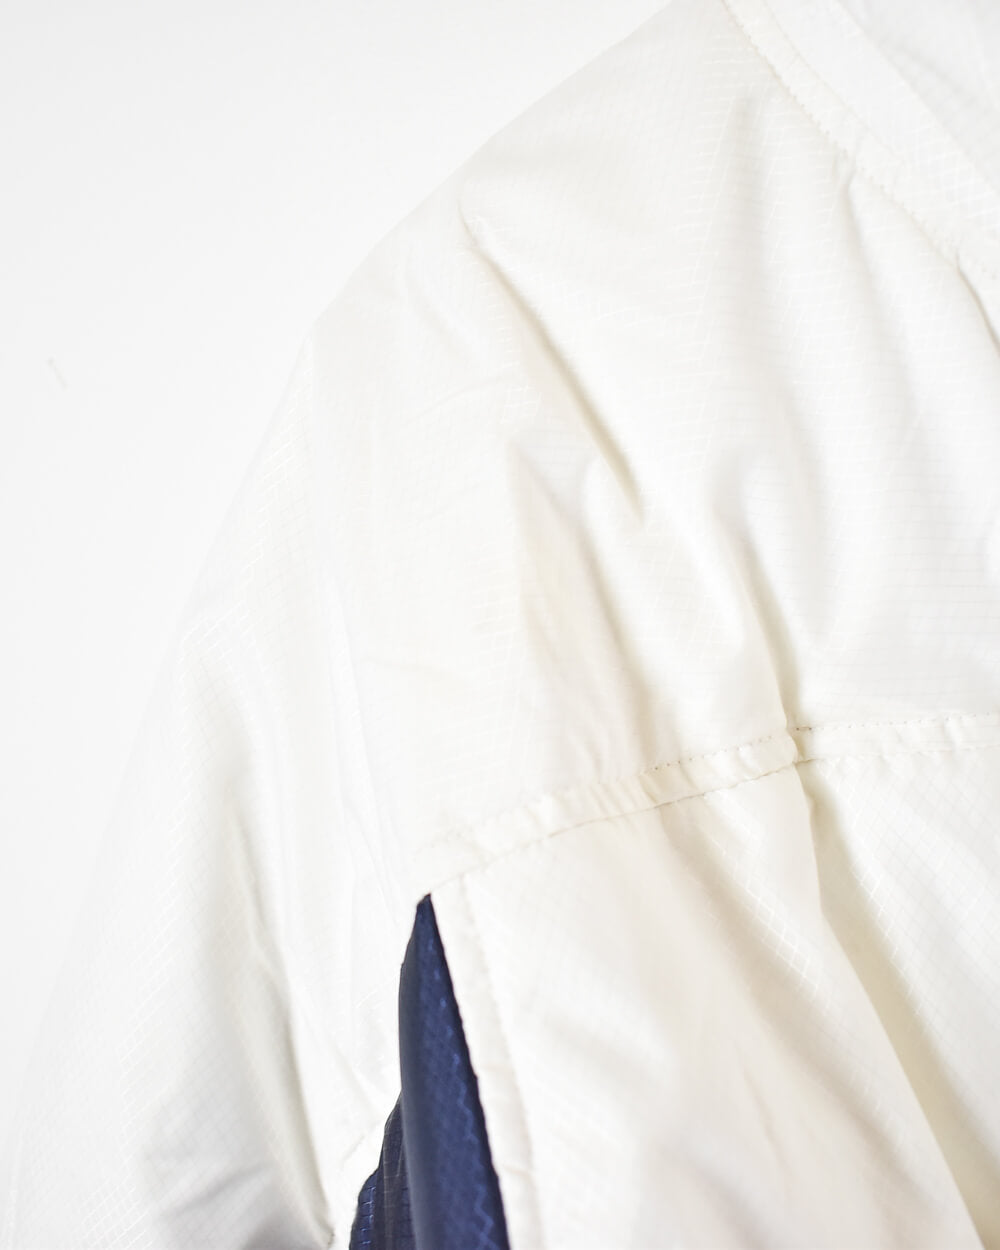 White Nike Puffer Jacket - Medium